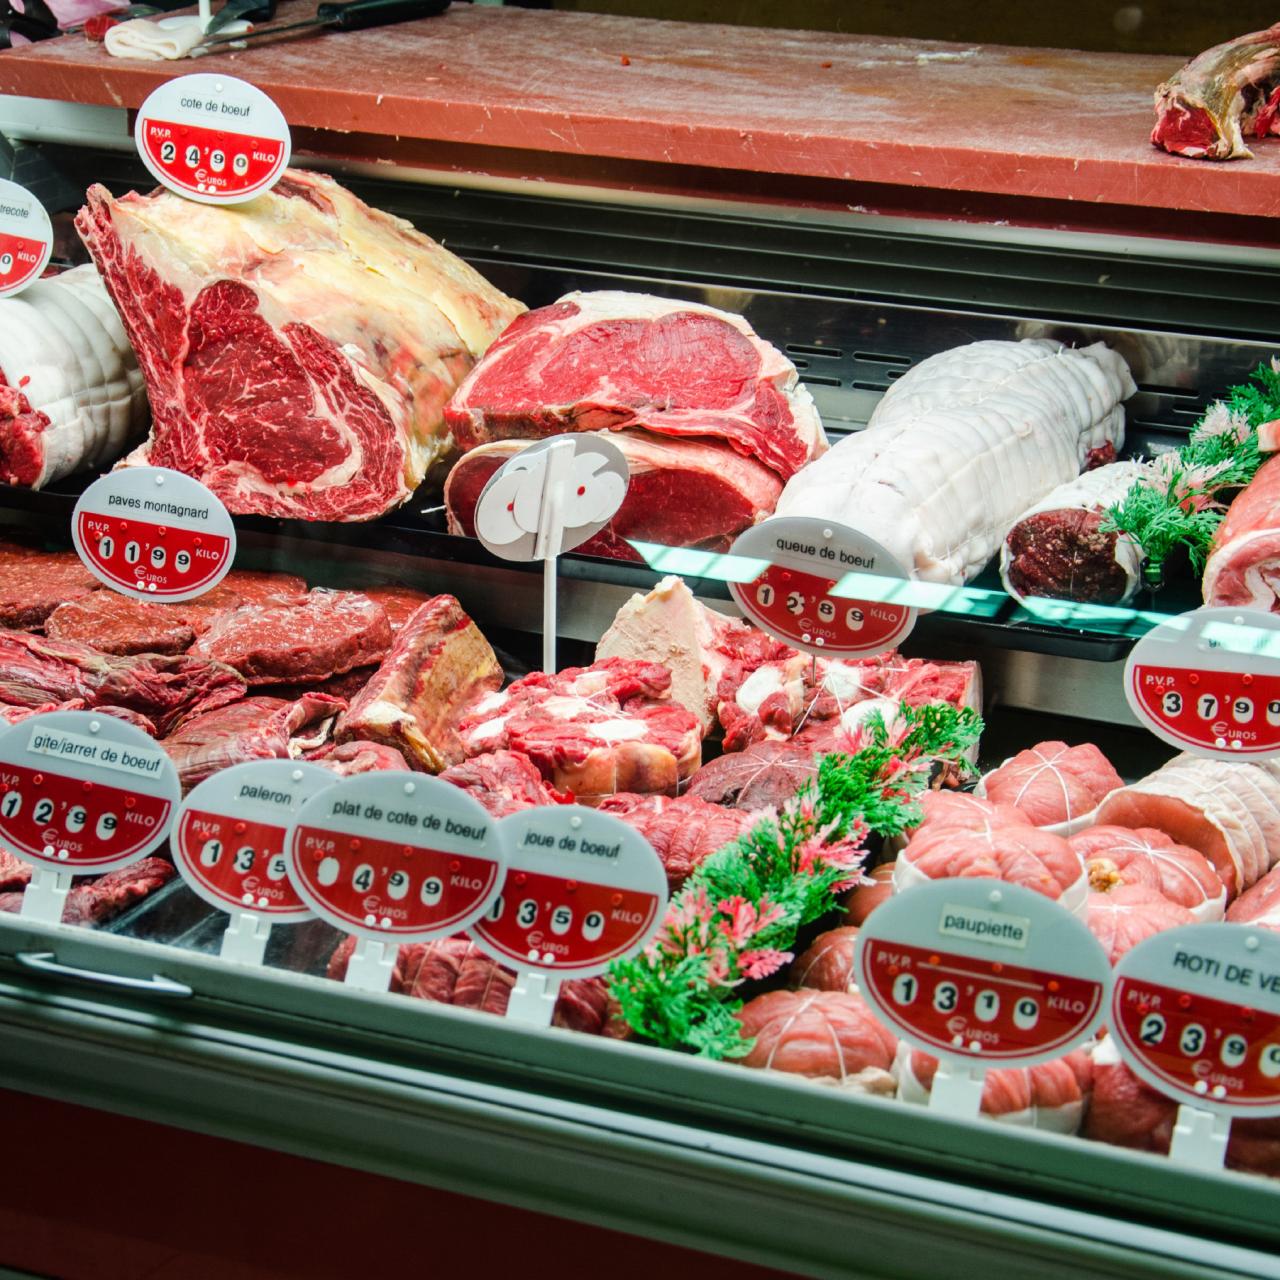 How to Buy Meat in Season